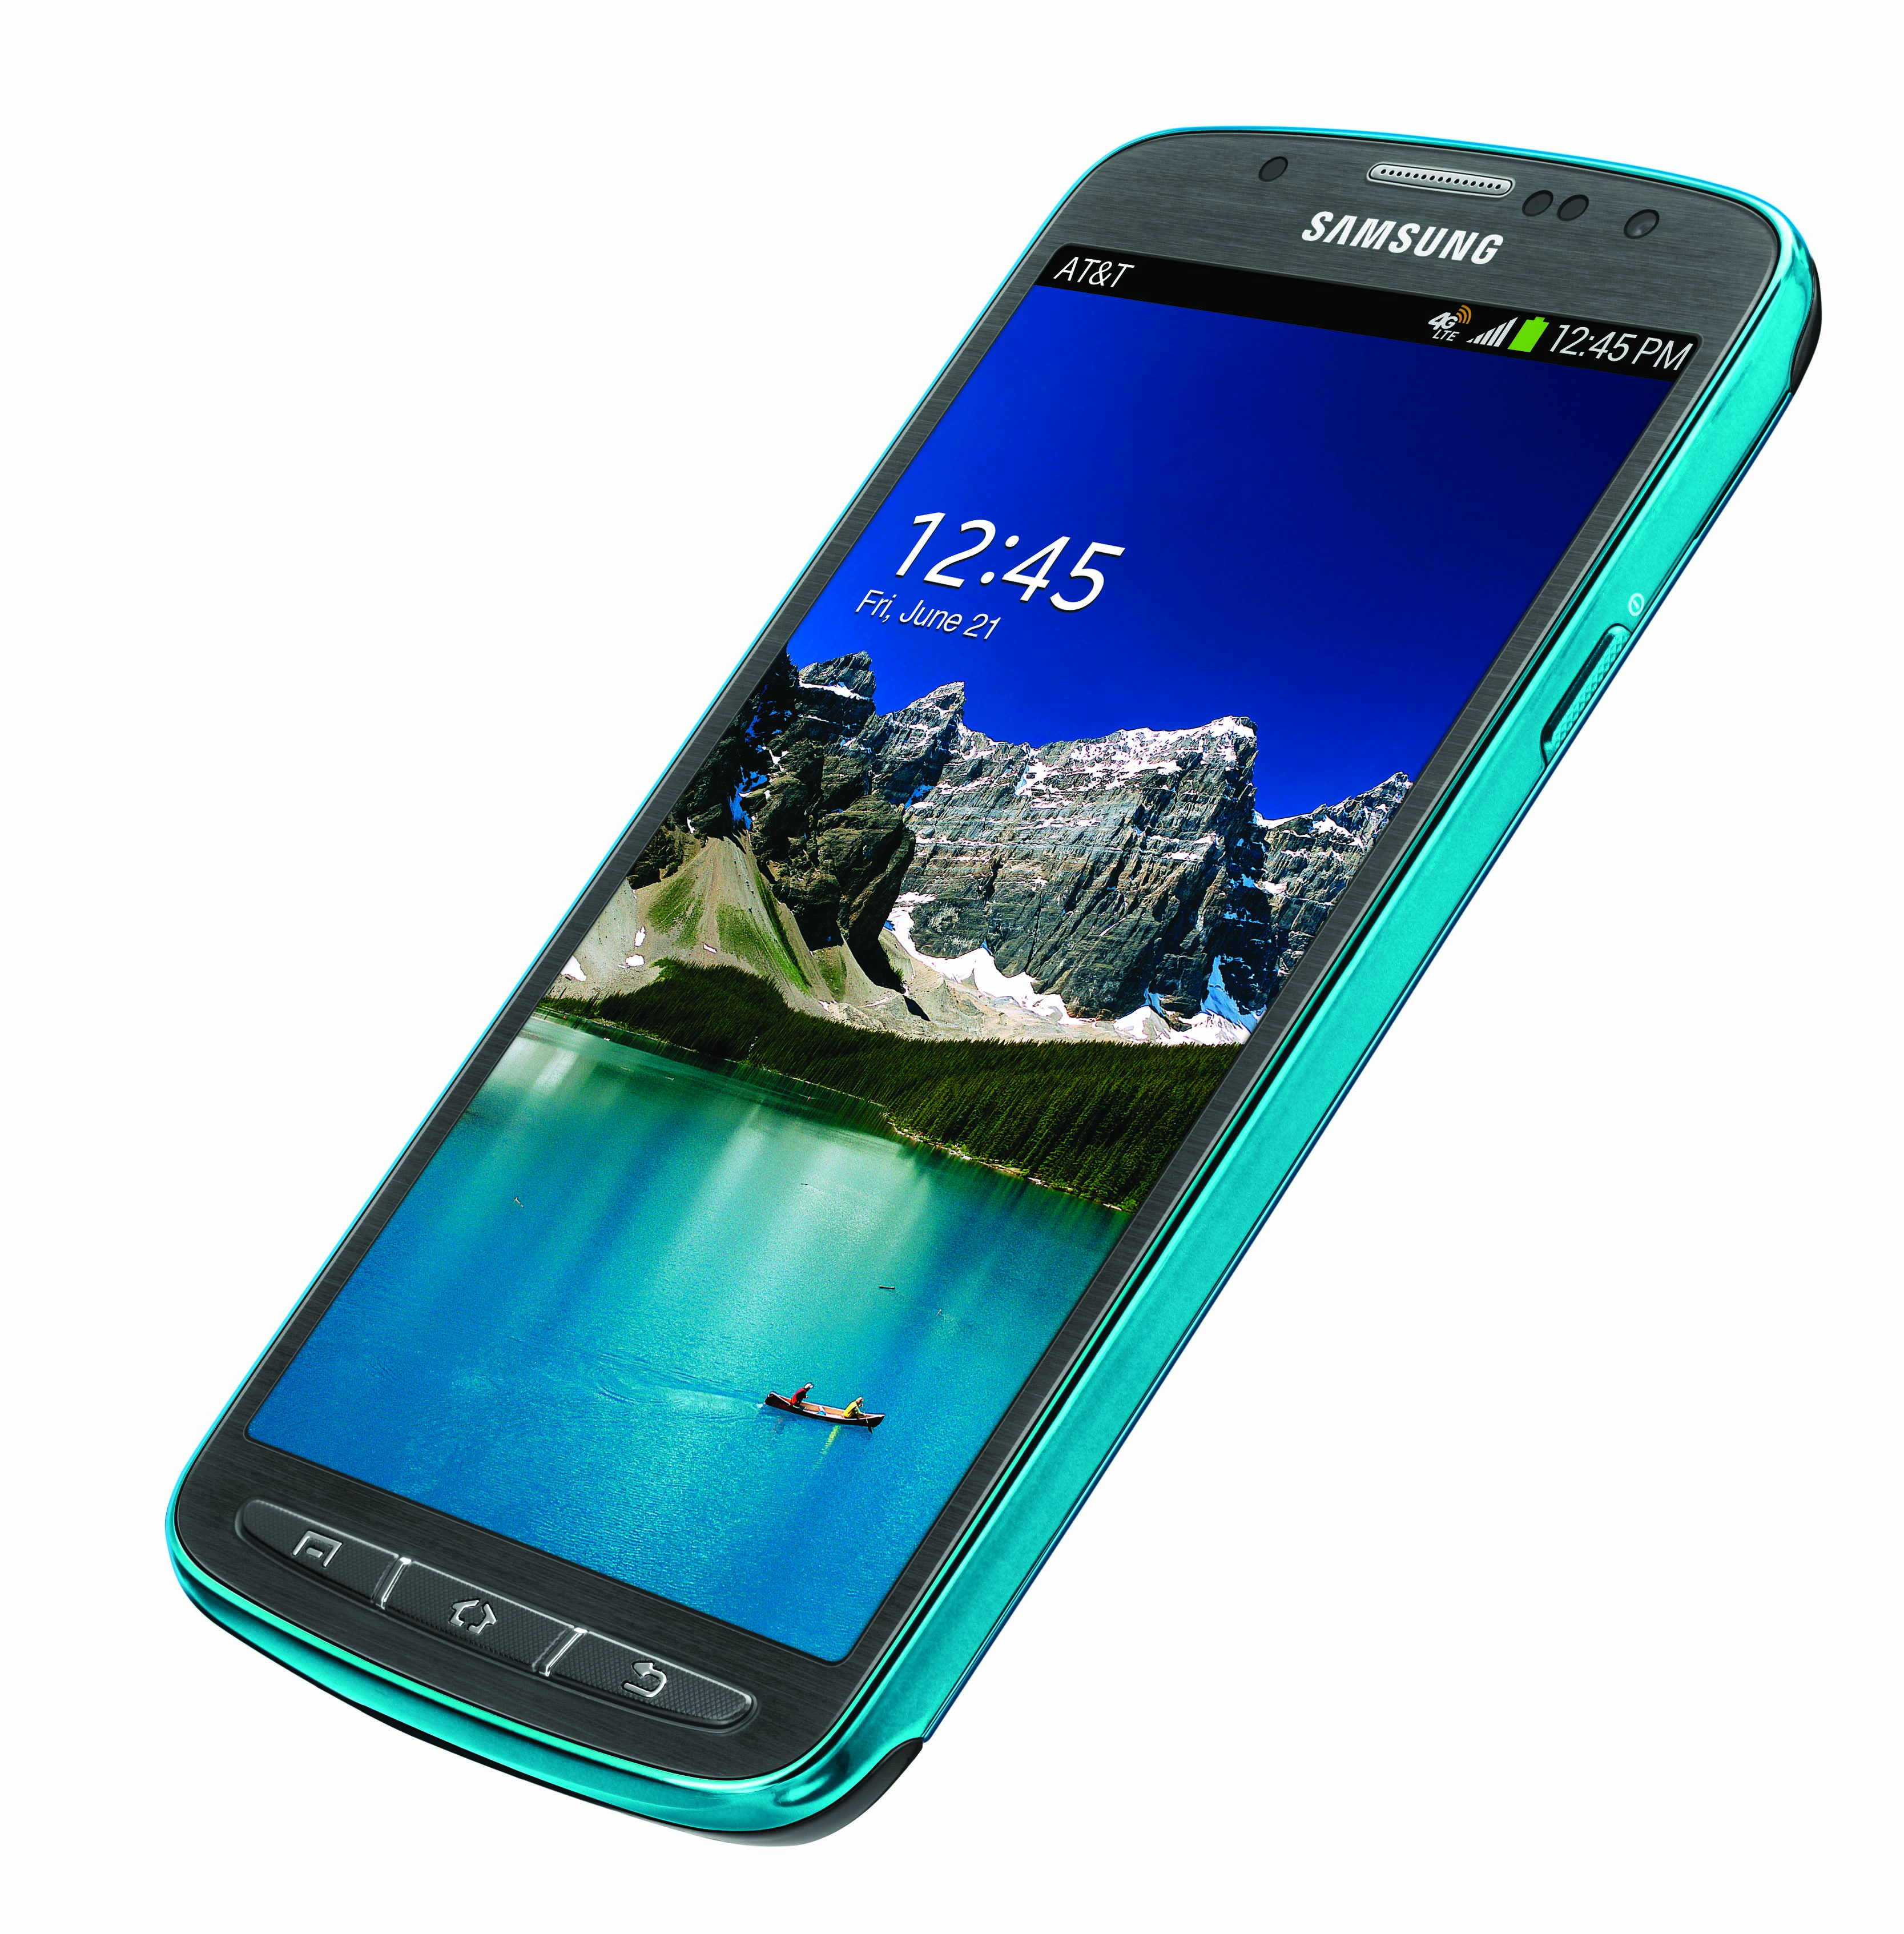 Samsung galaxy купить калининград. Samsung Galaxy s4 Active. Samsung s21 Active. Самсунг галакси с 21. Android Samsung Galaxy s 21.